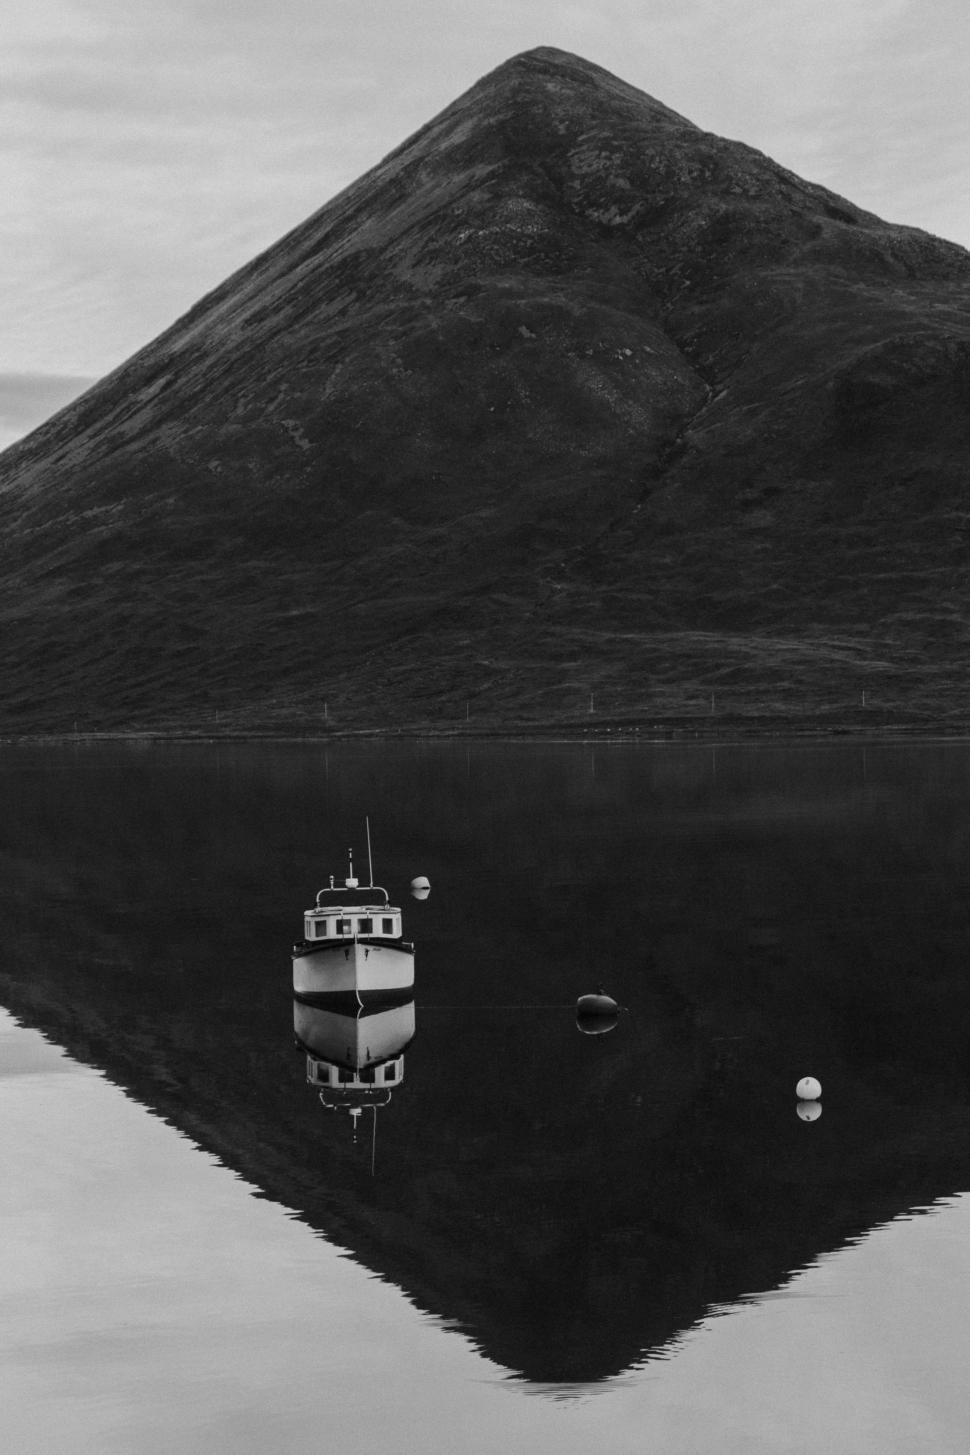 Free Image of Boat Floating on Lake Near Mountain 